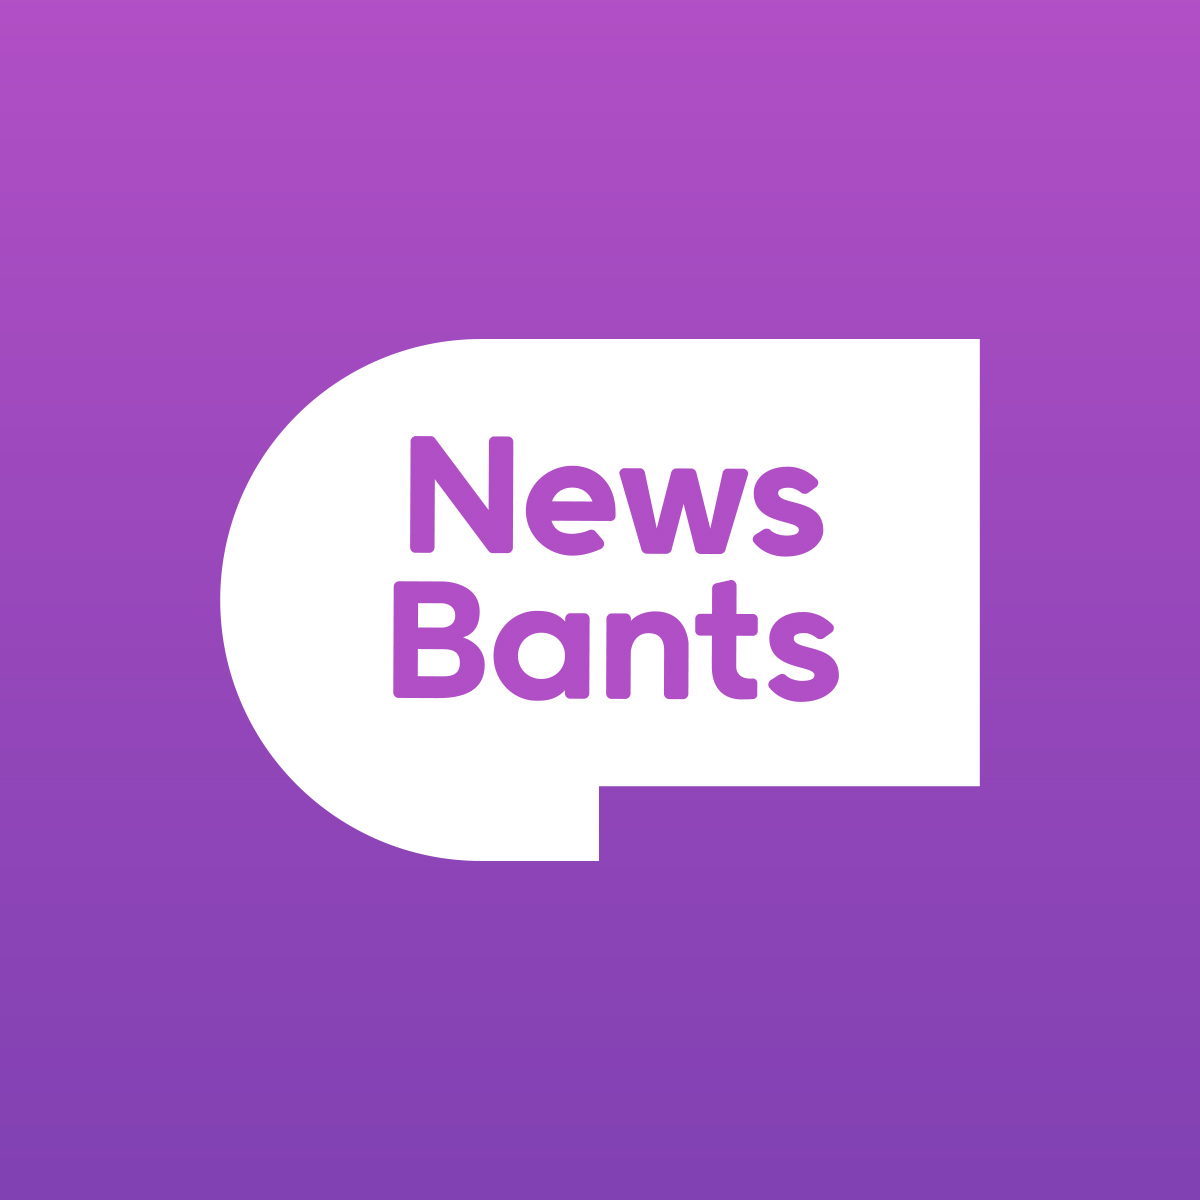 Various-Logos_NewsBants